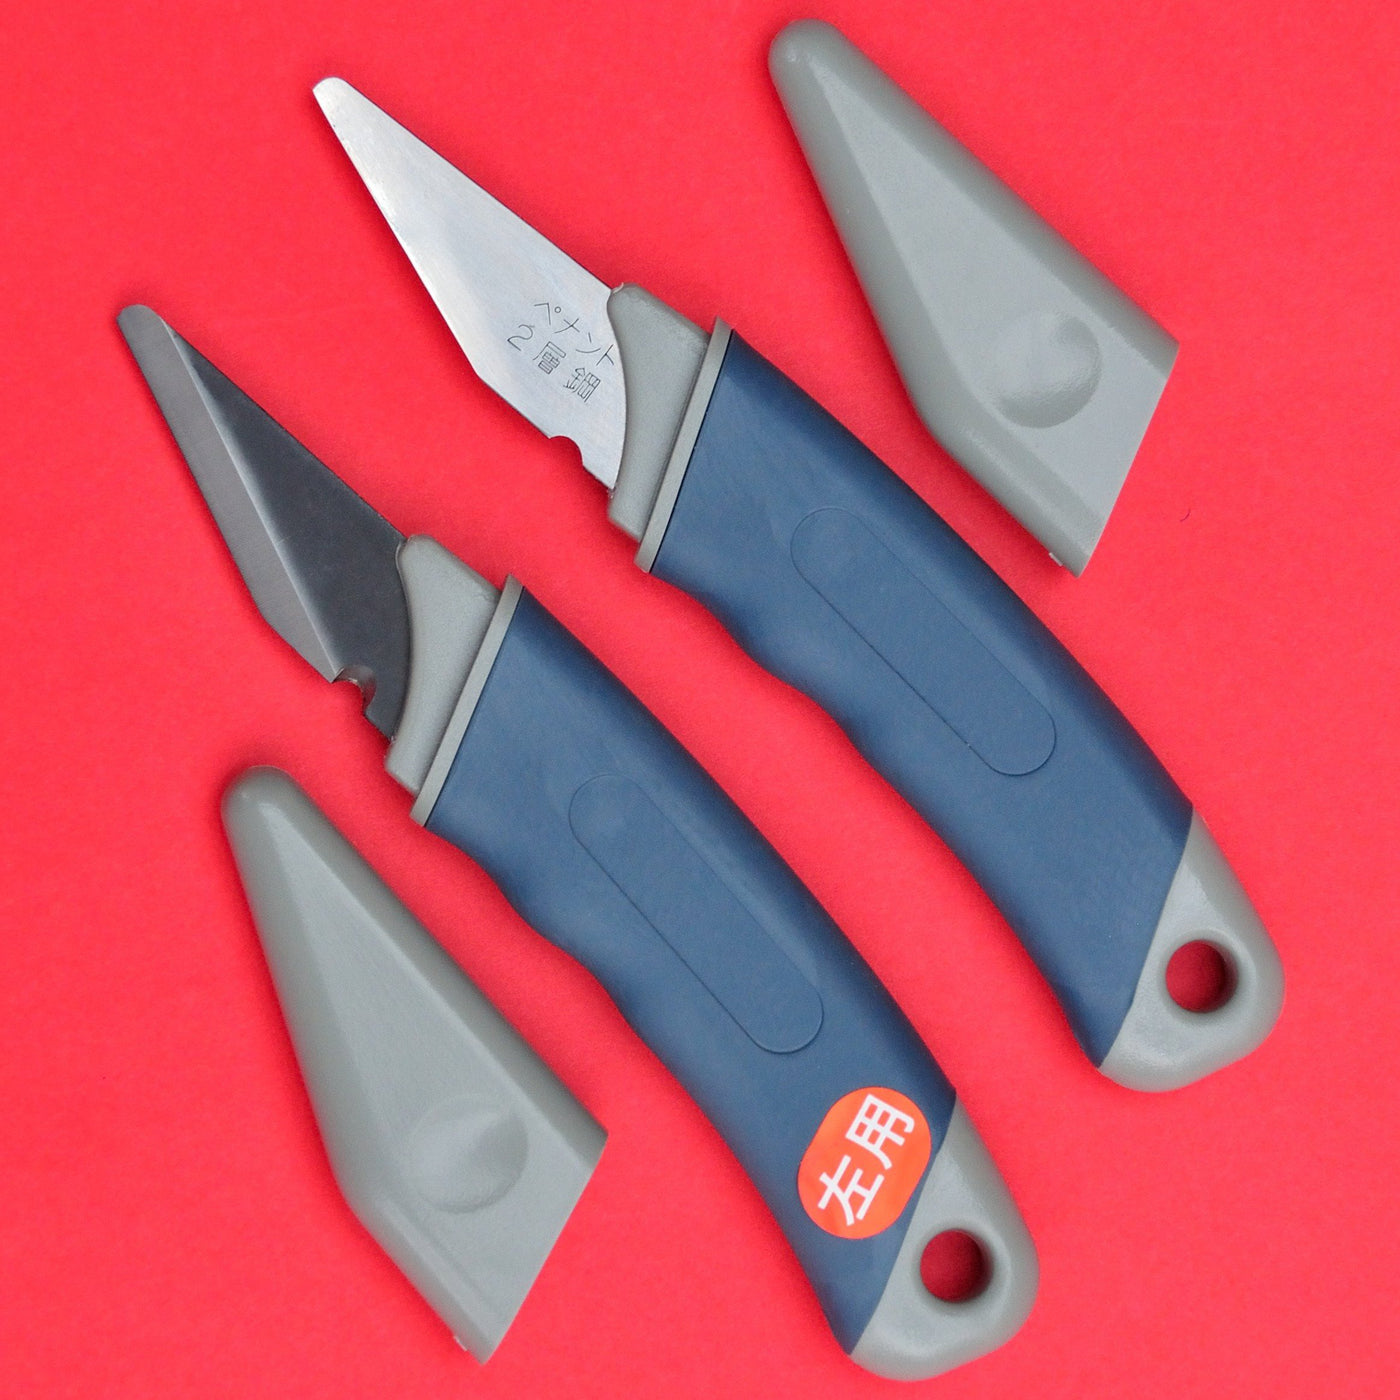 Yoshiharu H-7 Japanese wood carving knives, set of 7